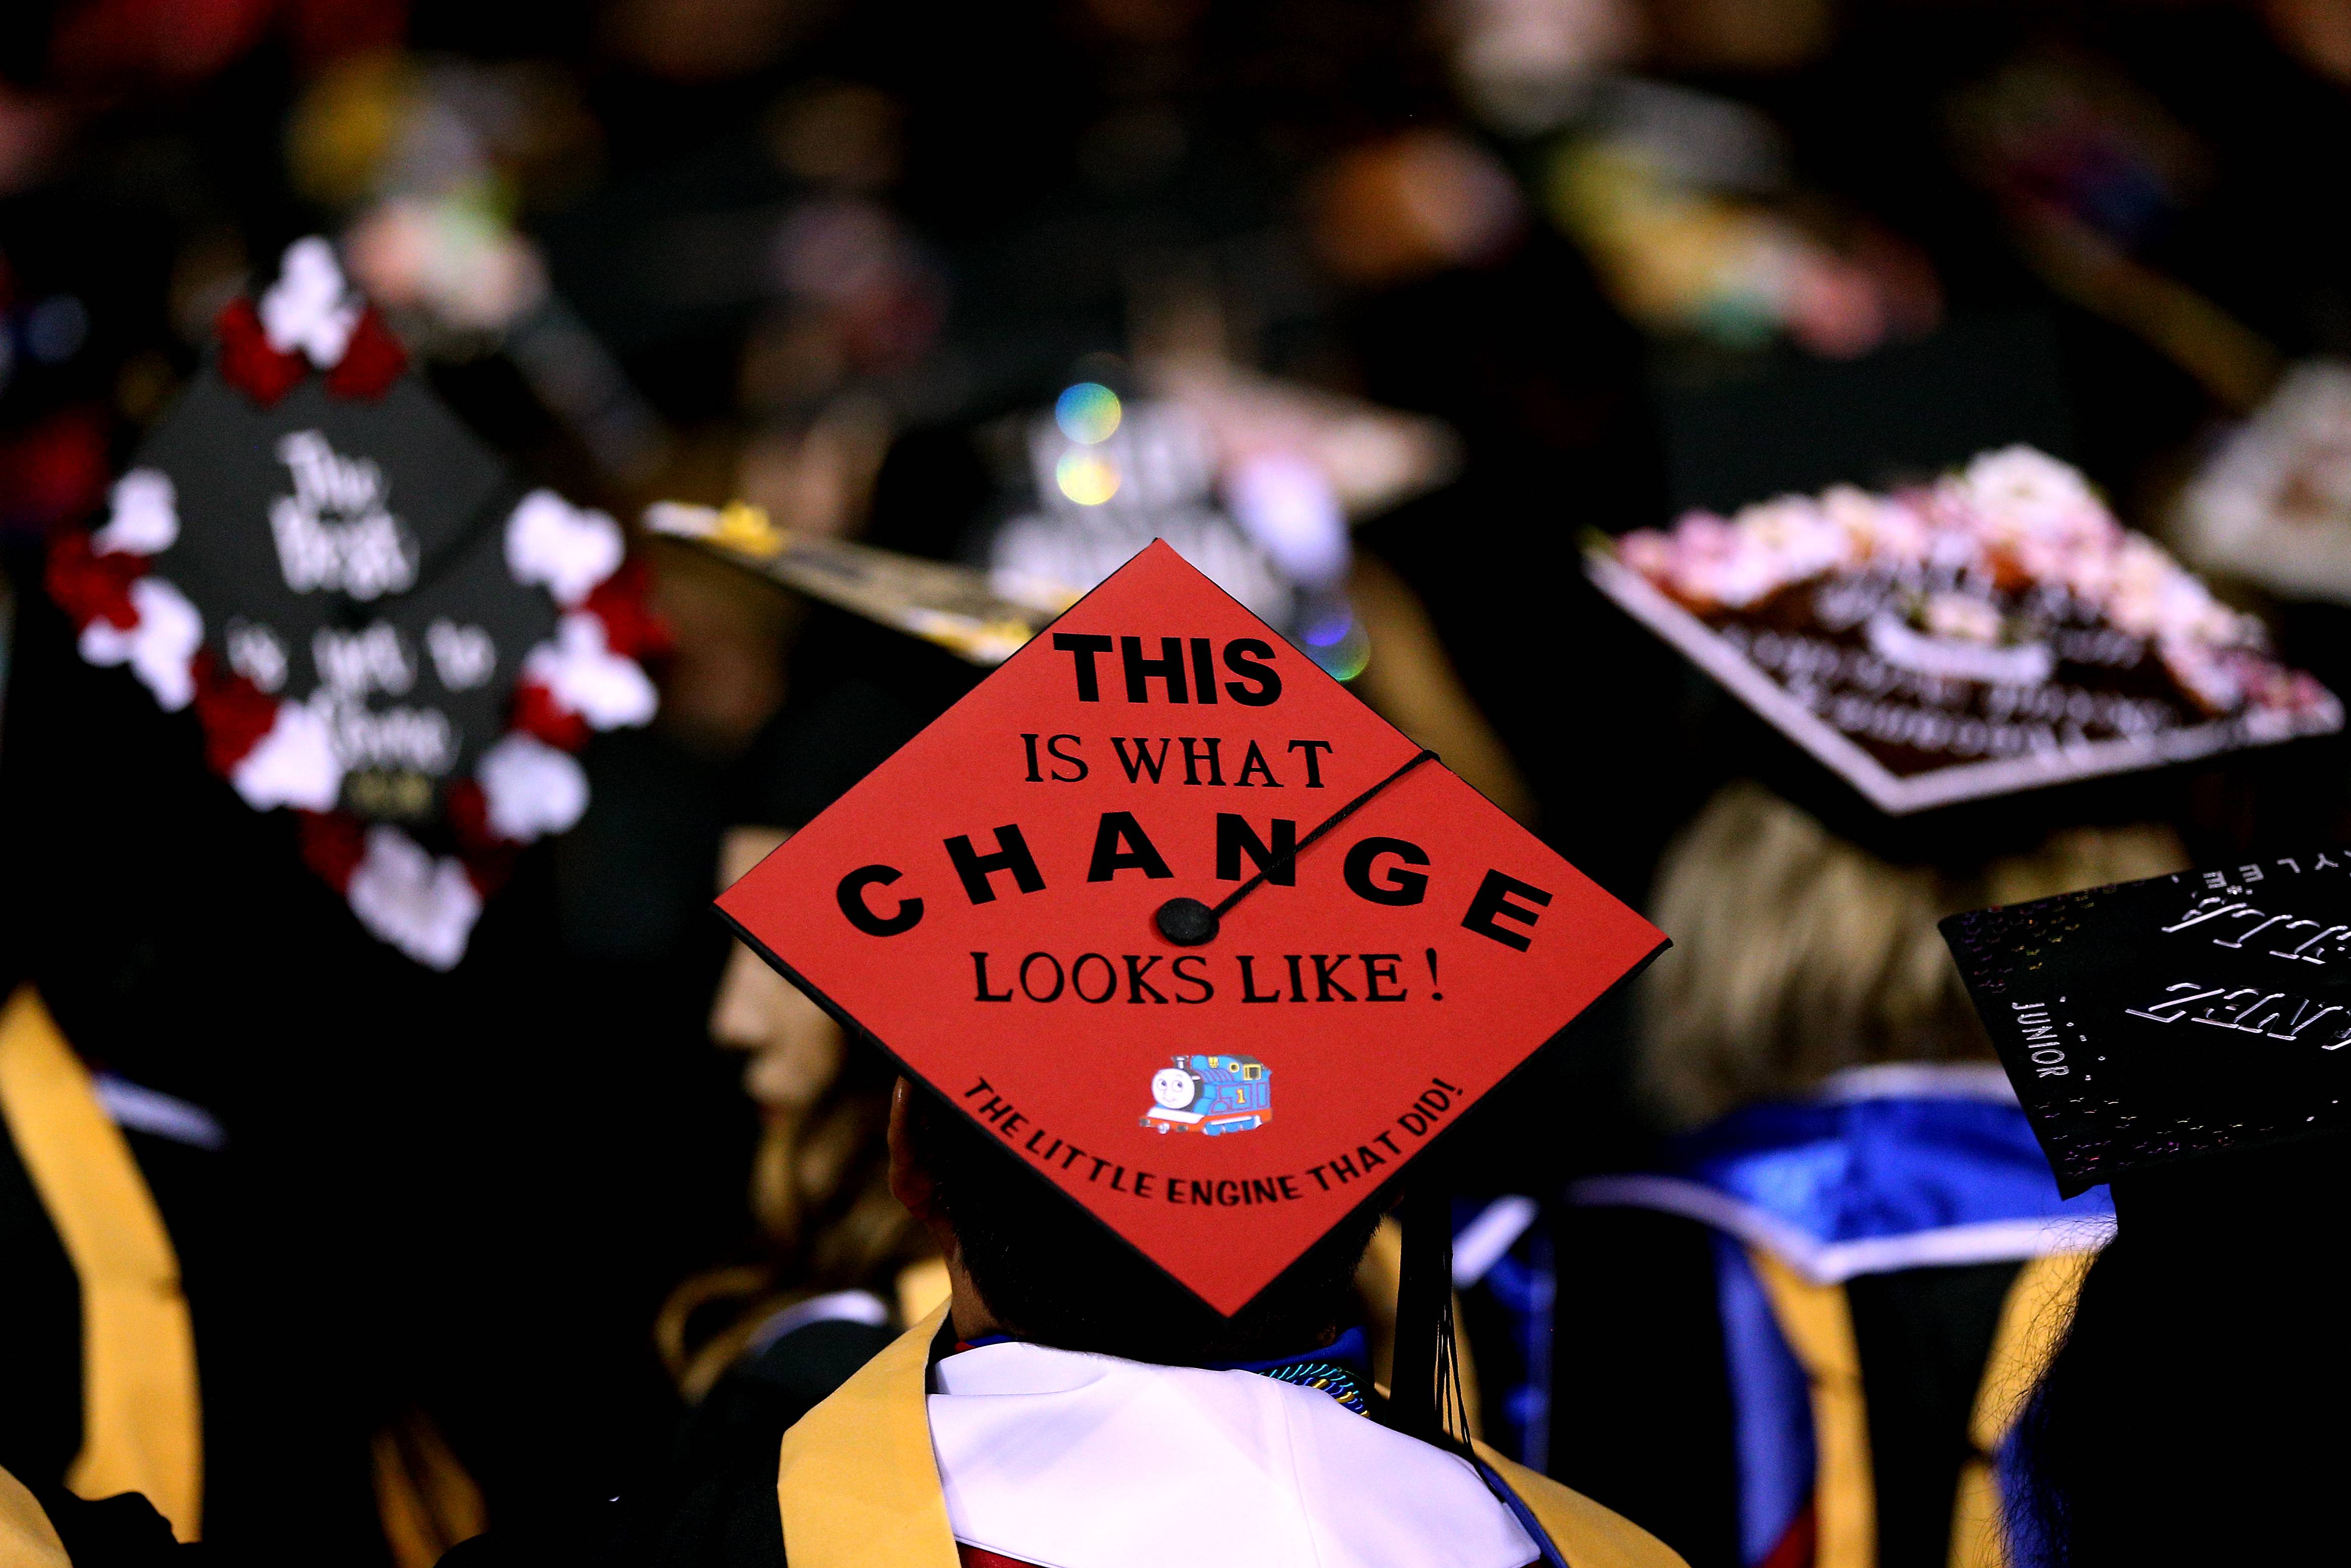 Student Wearing Decorated Grad Cap